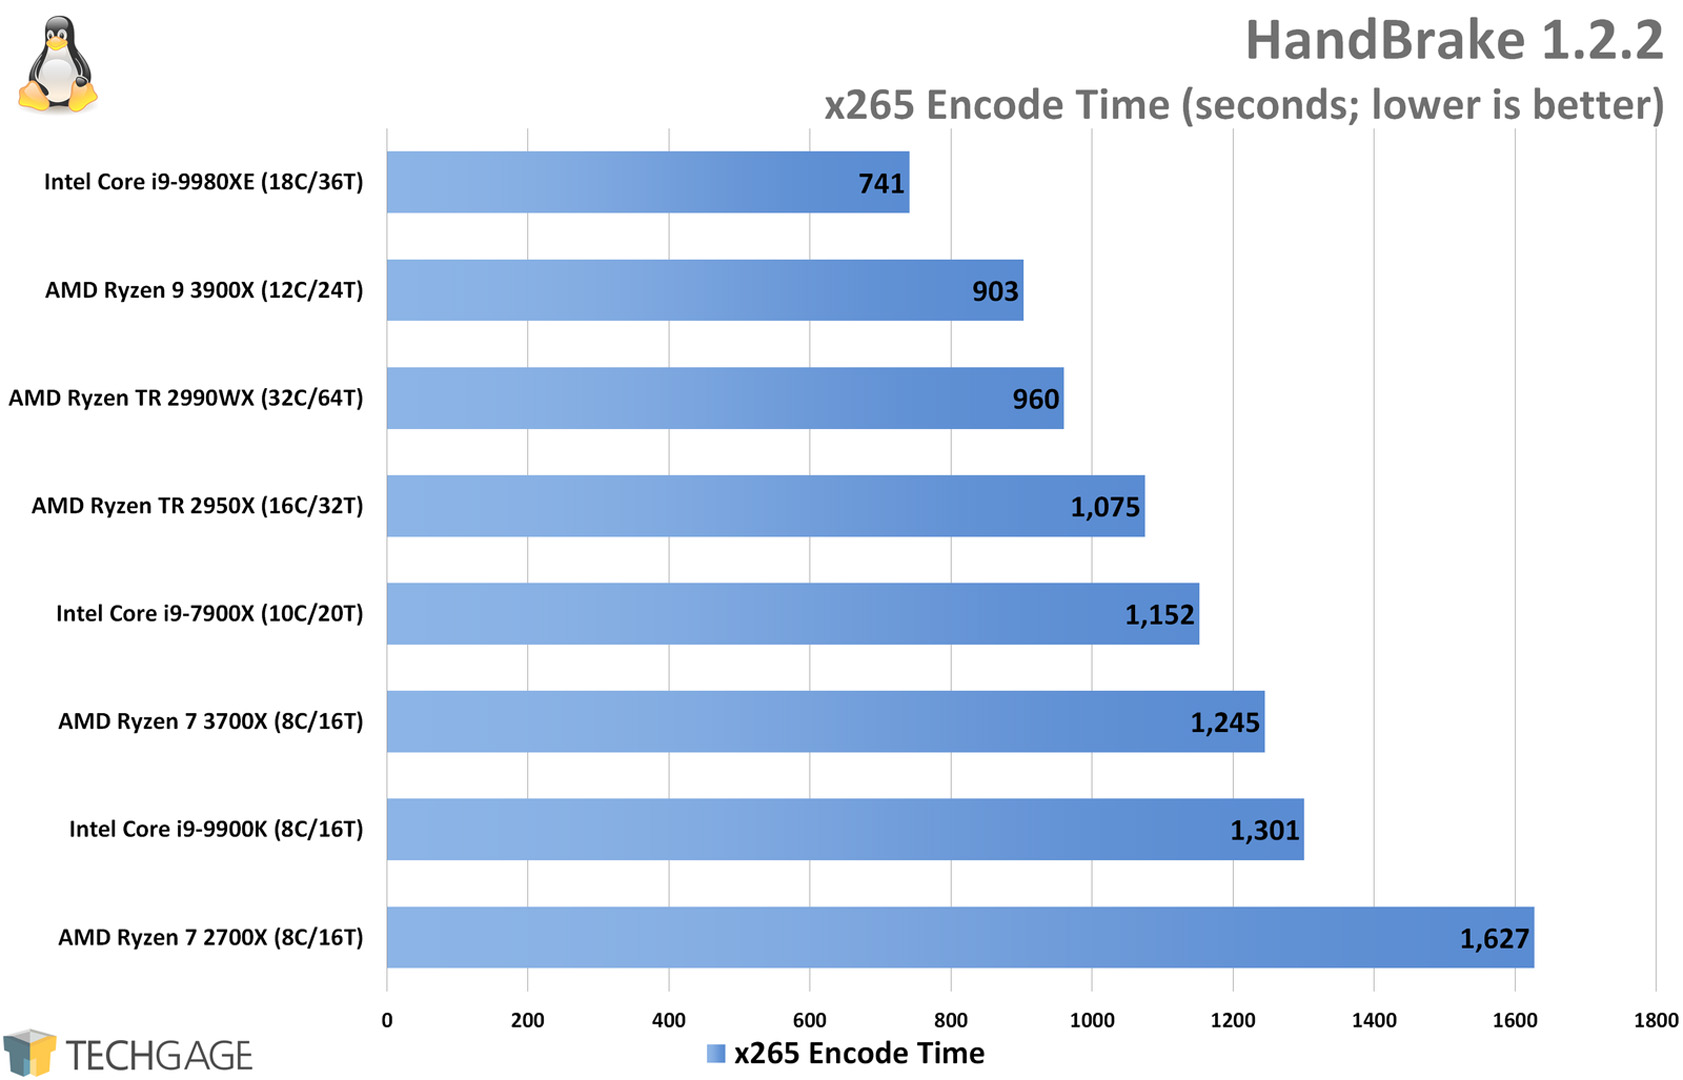 HandBrake x265 Encode Performance (Linux, AMD Ryzen 9 3900X and 7 3700X)